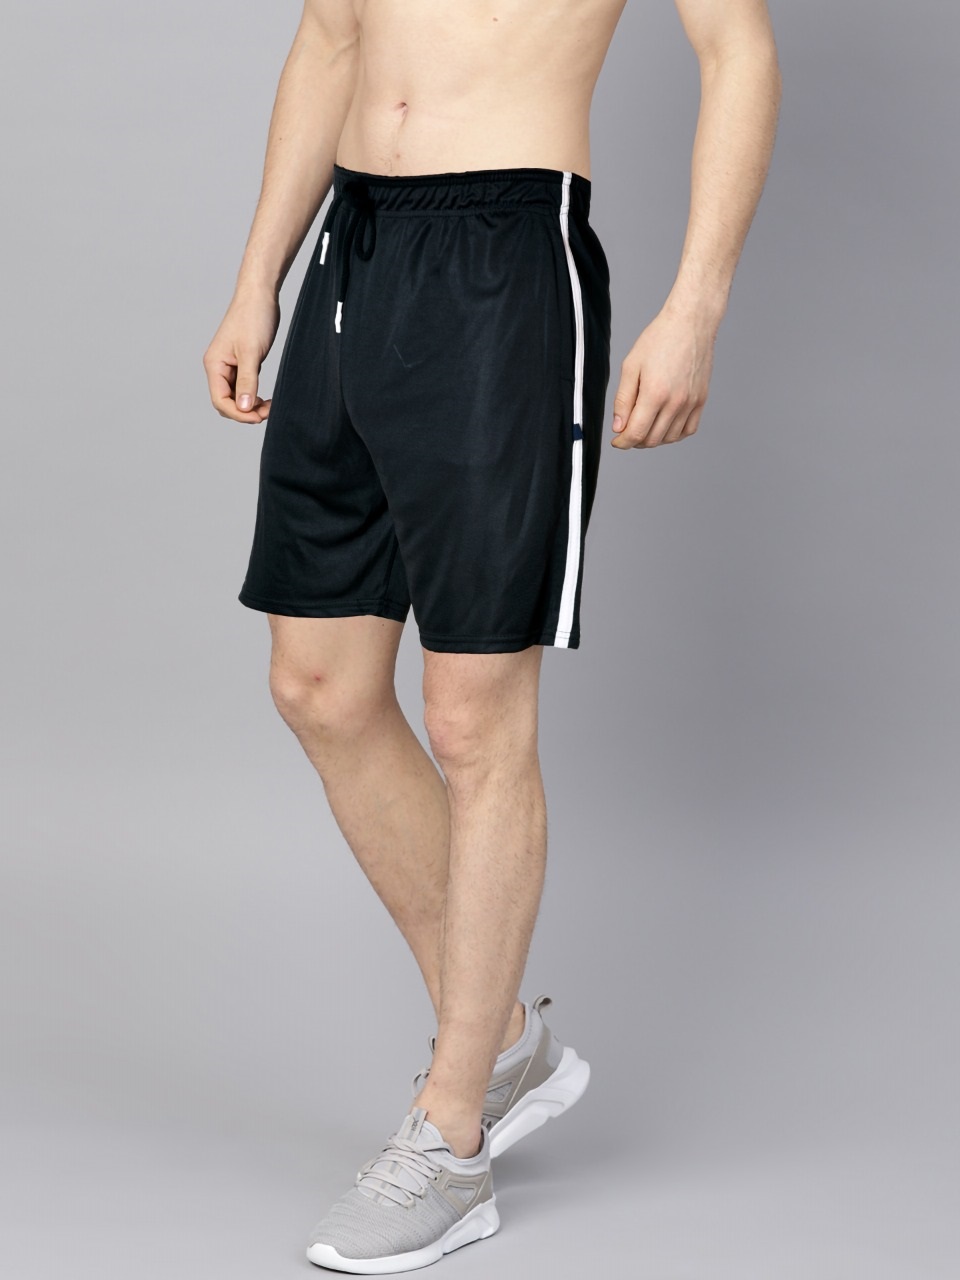 Kaspy Men's Striped Shorts - Wholesale Online Shopping For Men, Boys